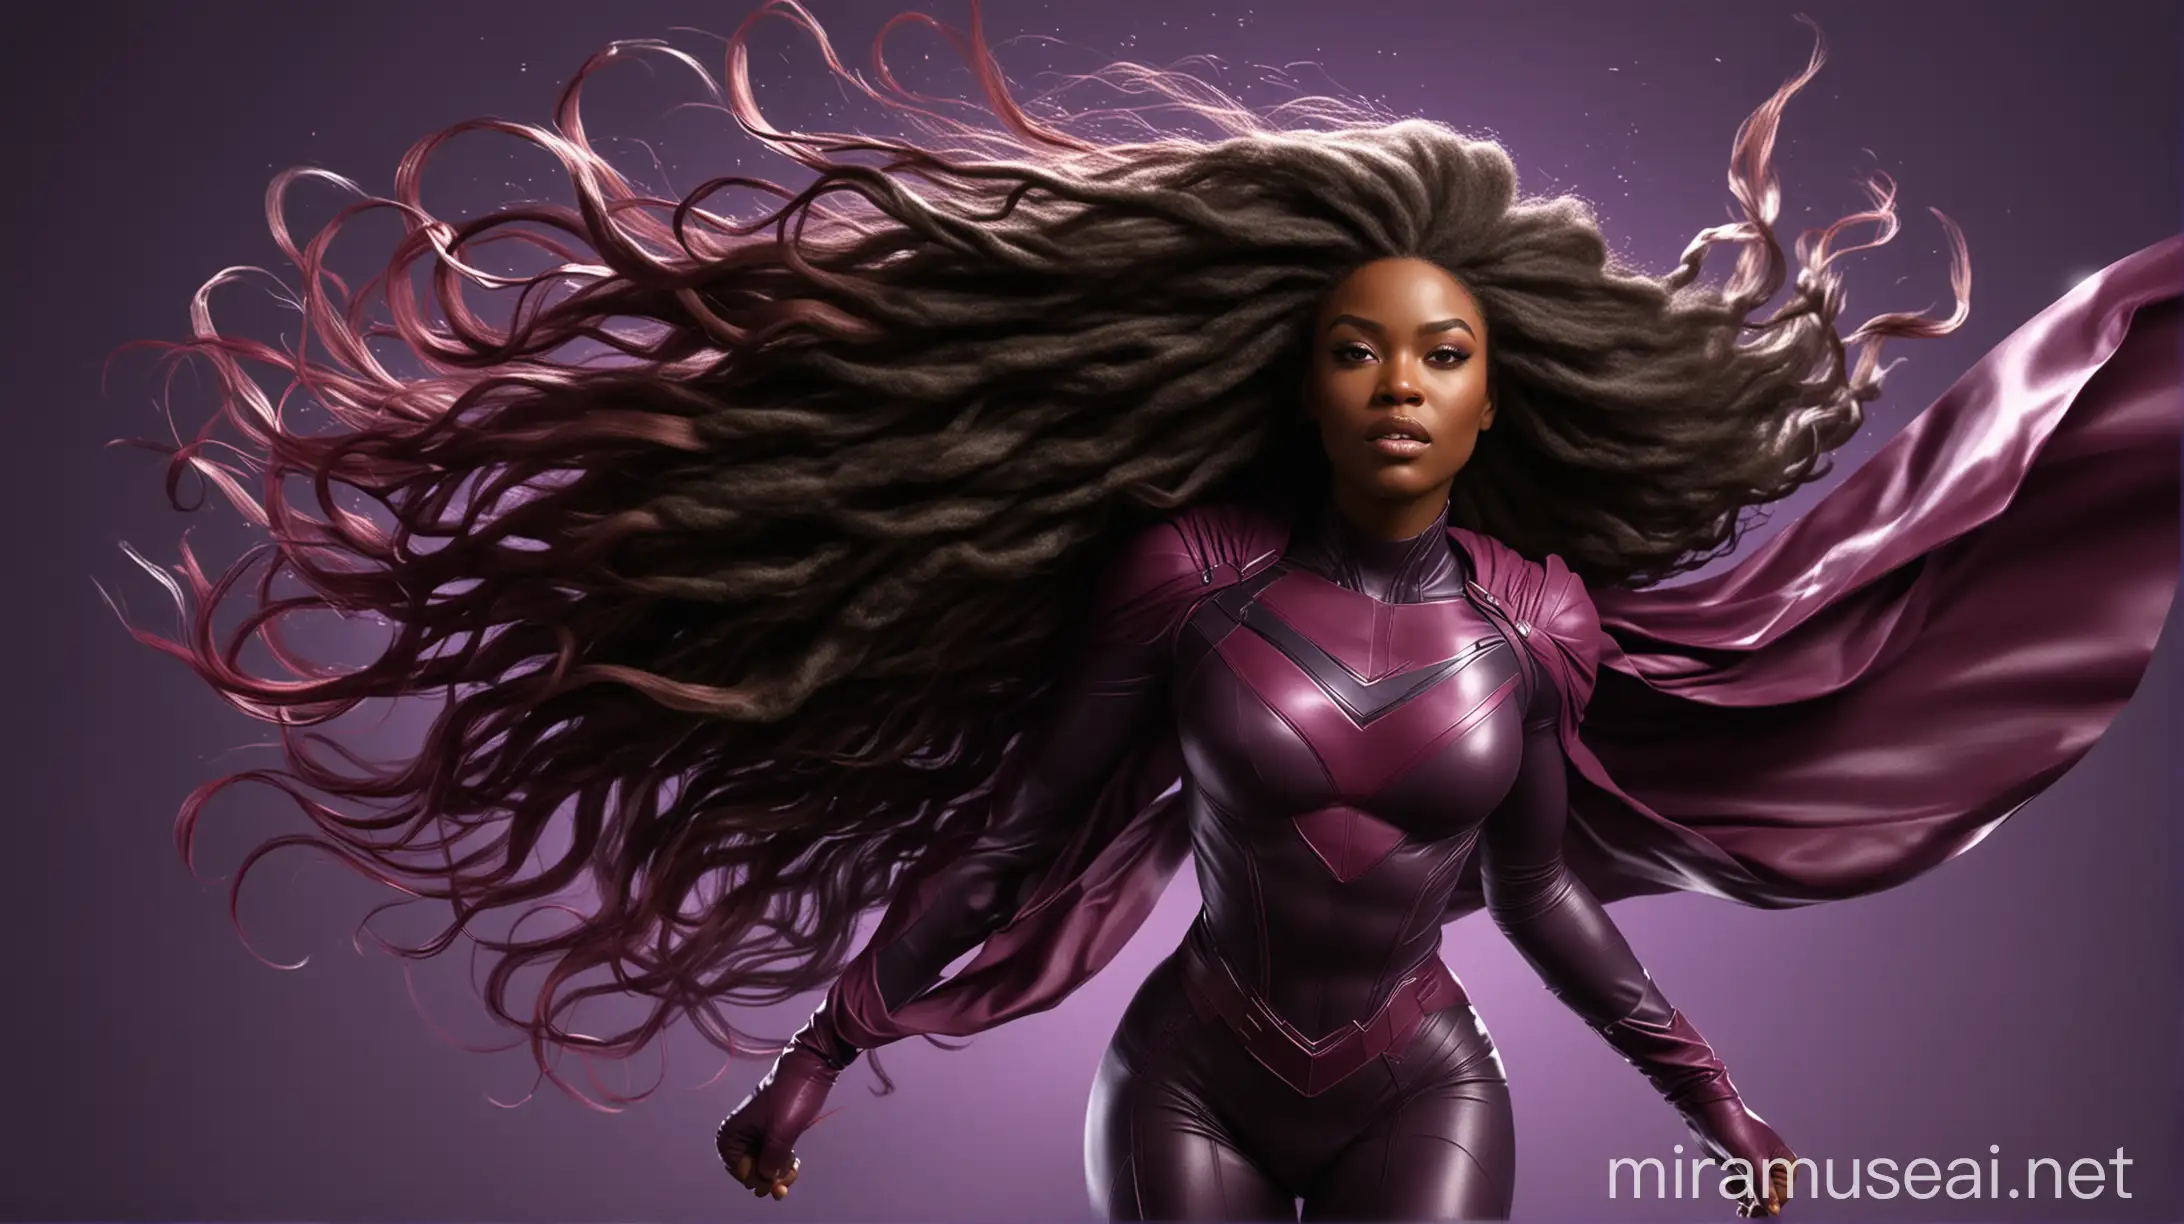 Black Woman Superhero in Dynamic Pose with Long Natural Hair